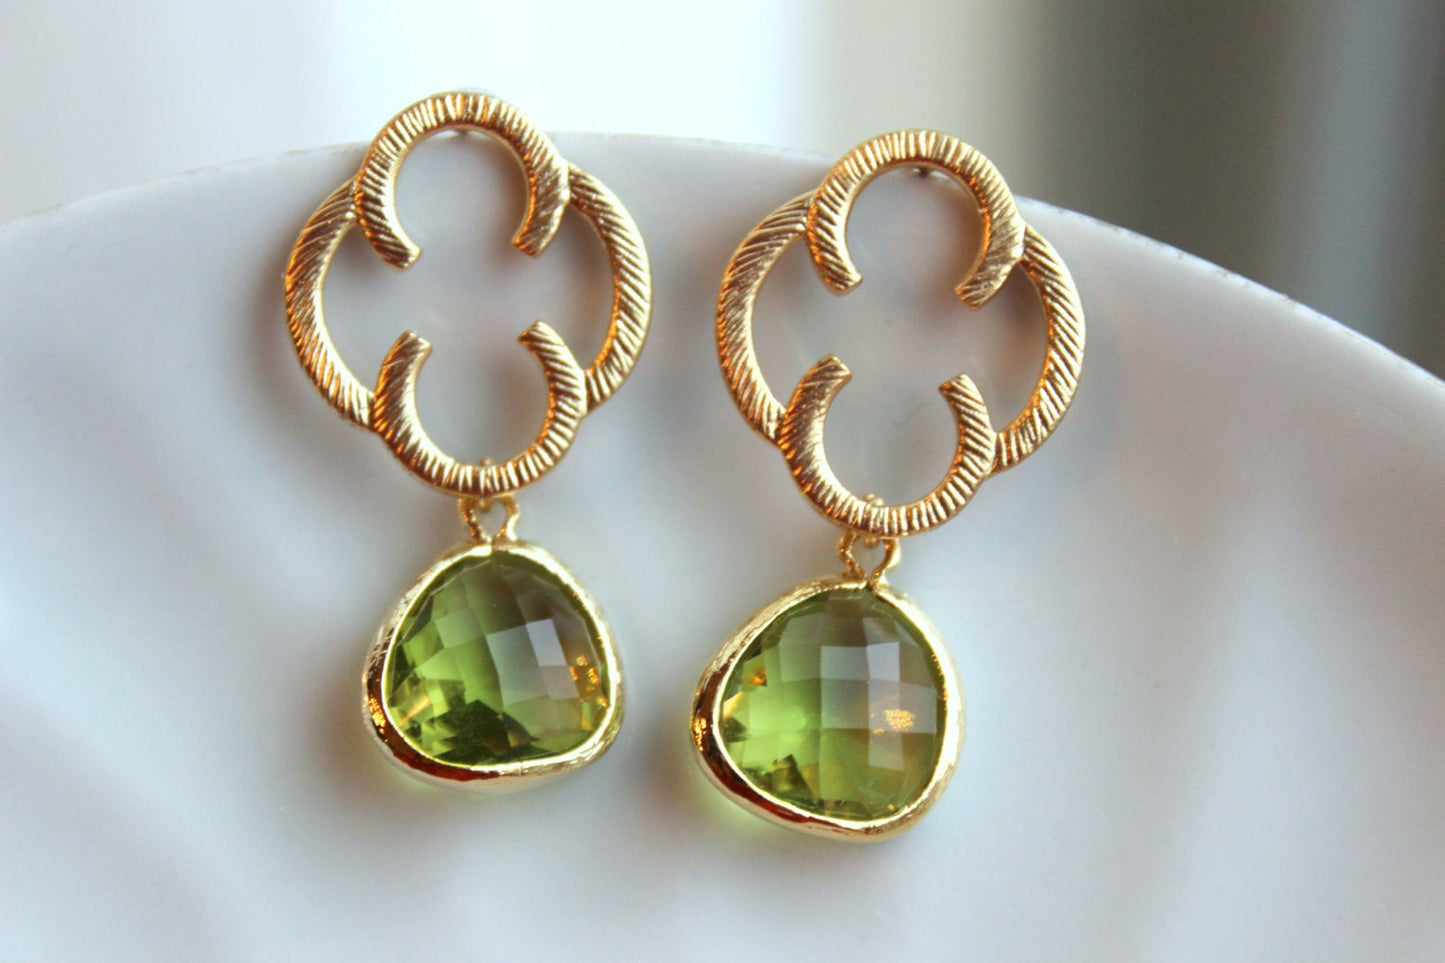 Peridot Green Earrings Gold Clover Quatrefoil - Sterling Silver Posts - Bridesmaid Earrings - Wedding Earrings - Peridot Wedding Jewelry